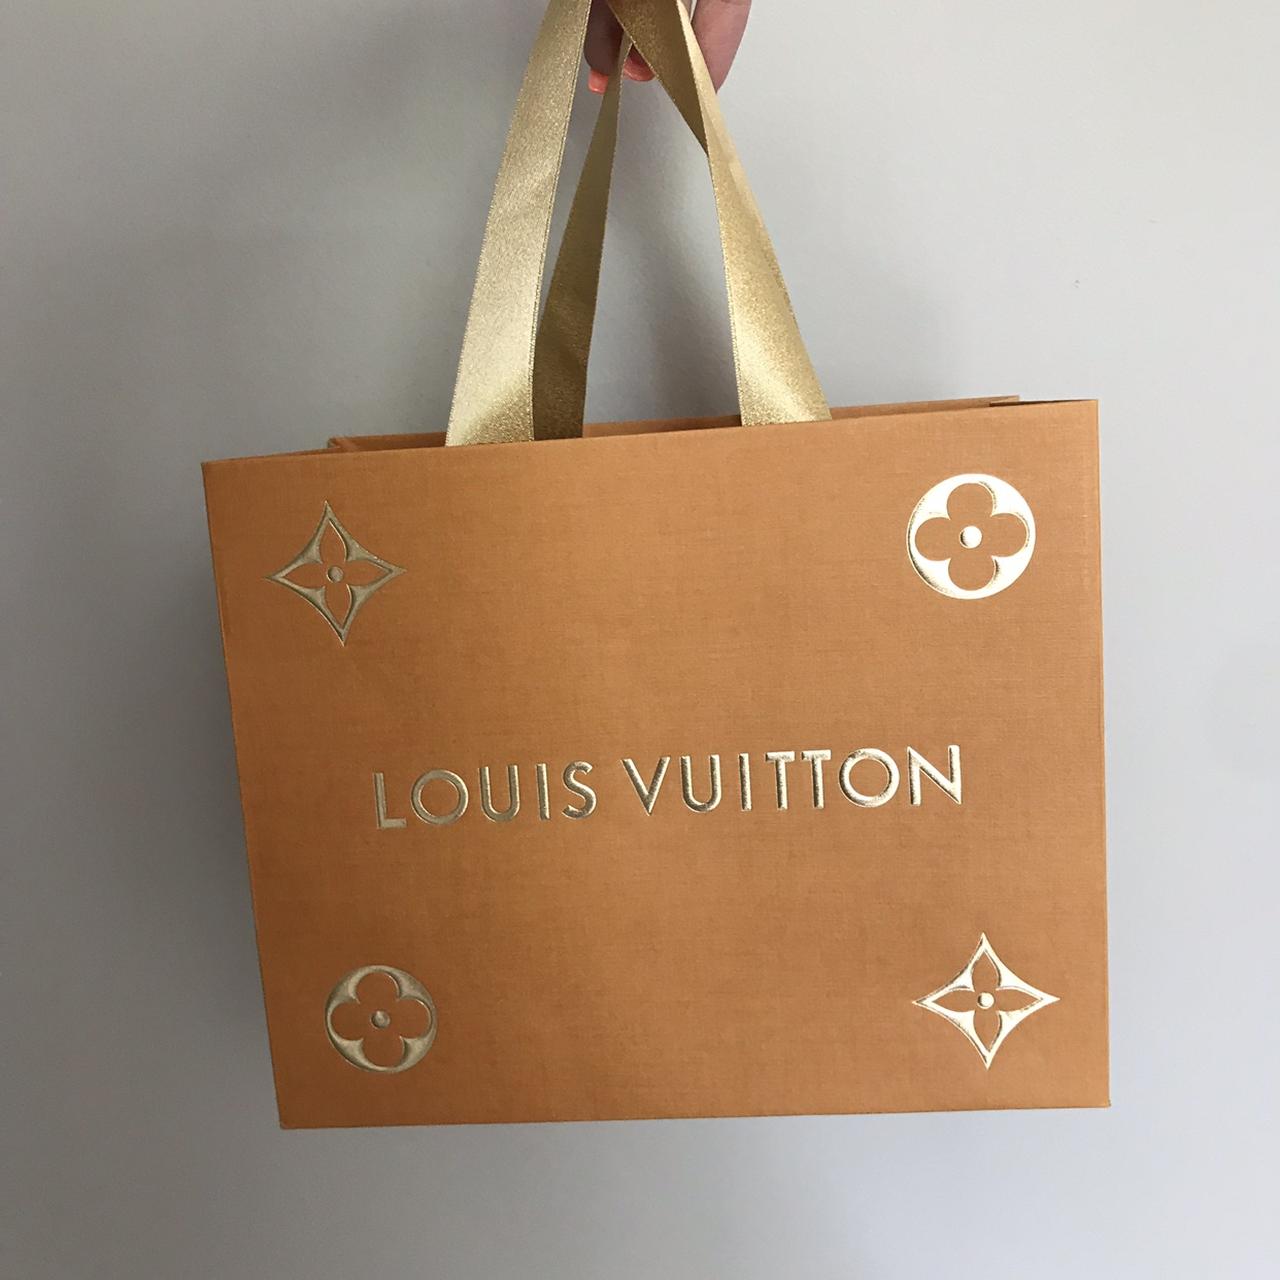 ☆ READ SHOP POLICIES Vintage Louis Vuitton logo - Depop